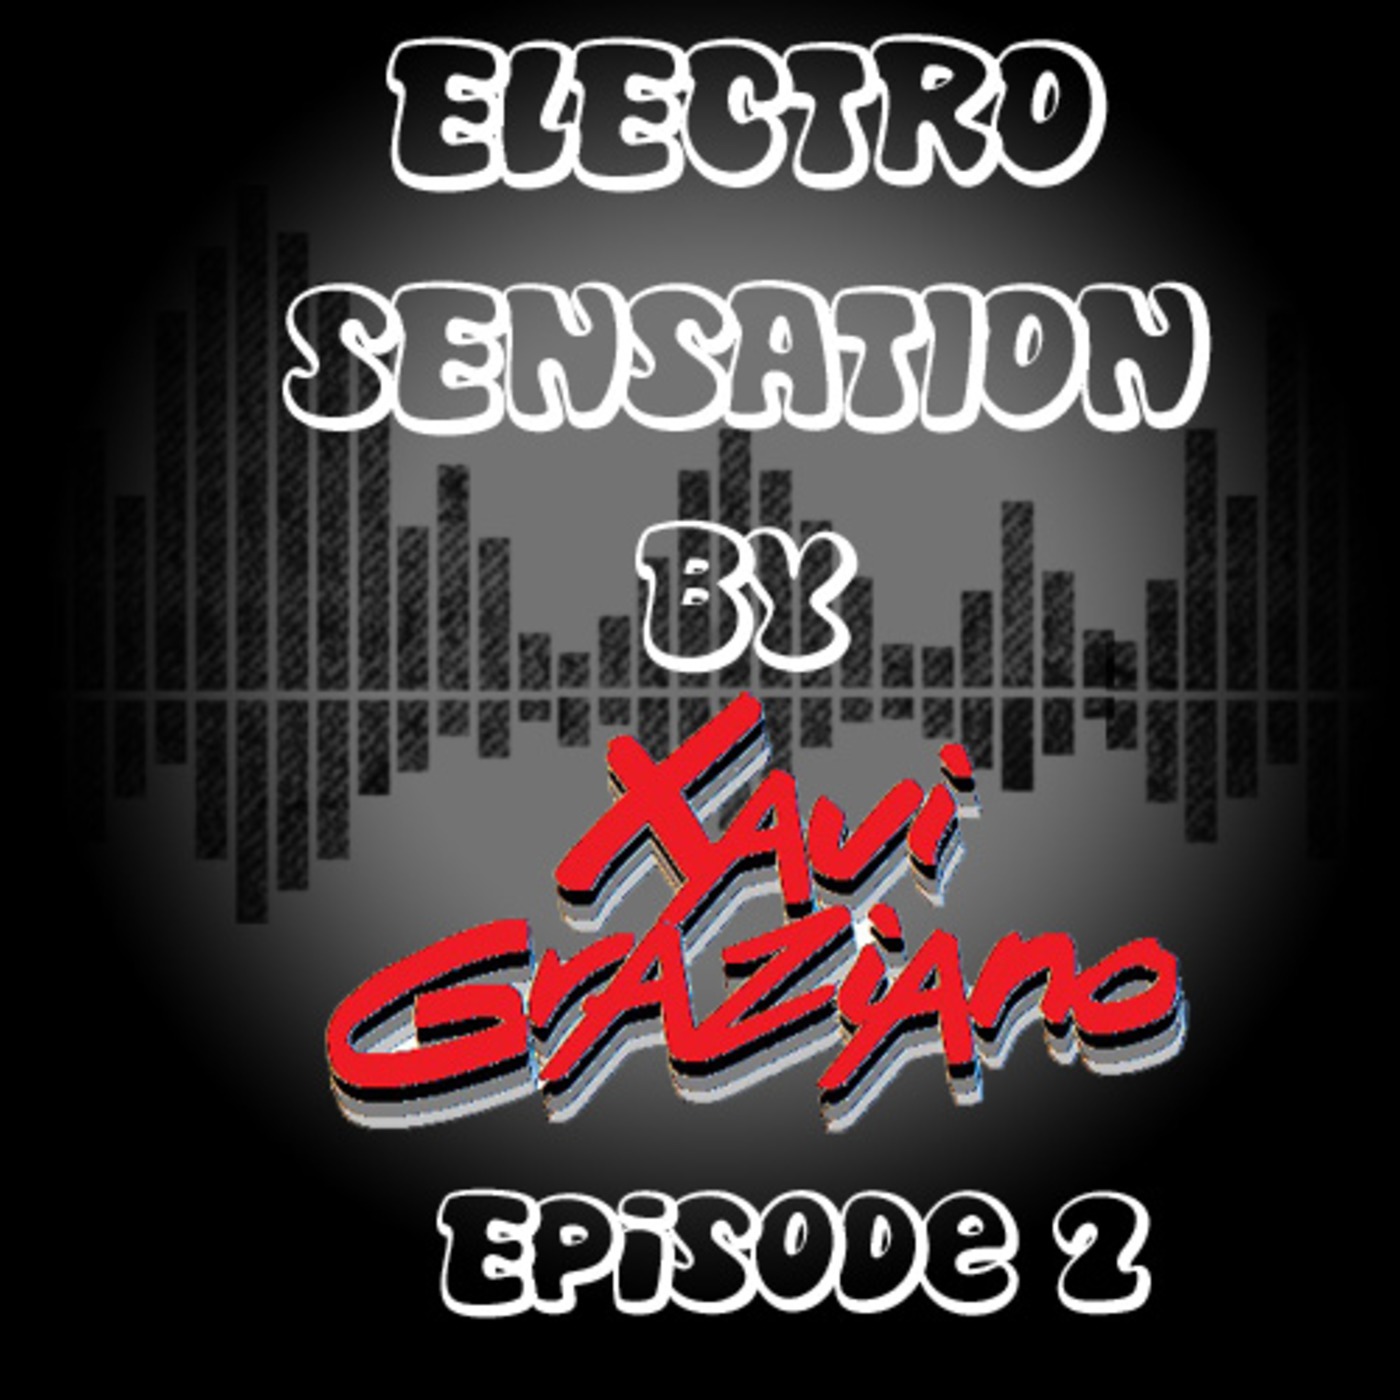 Electro Sensation by Xavi Graziano Episode 2